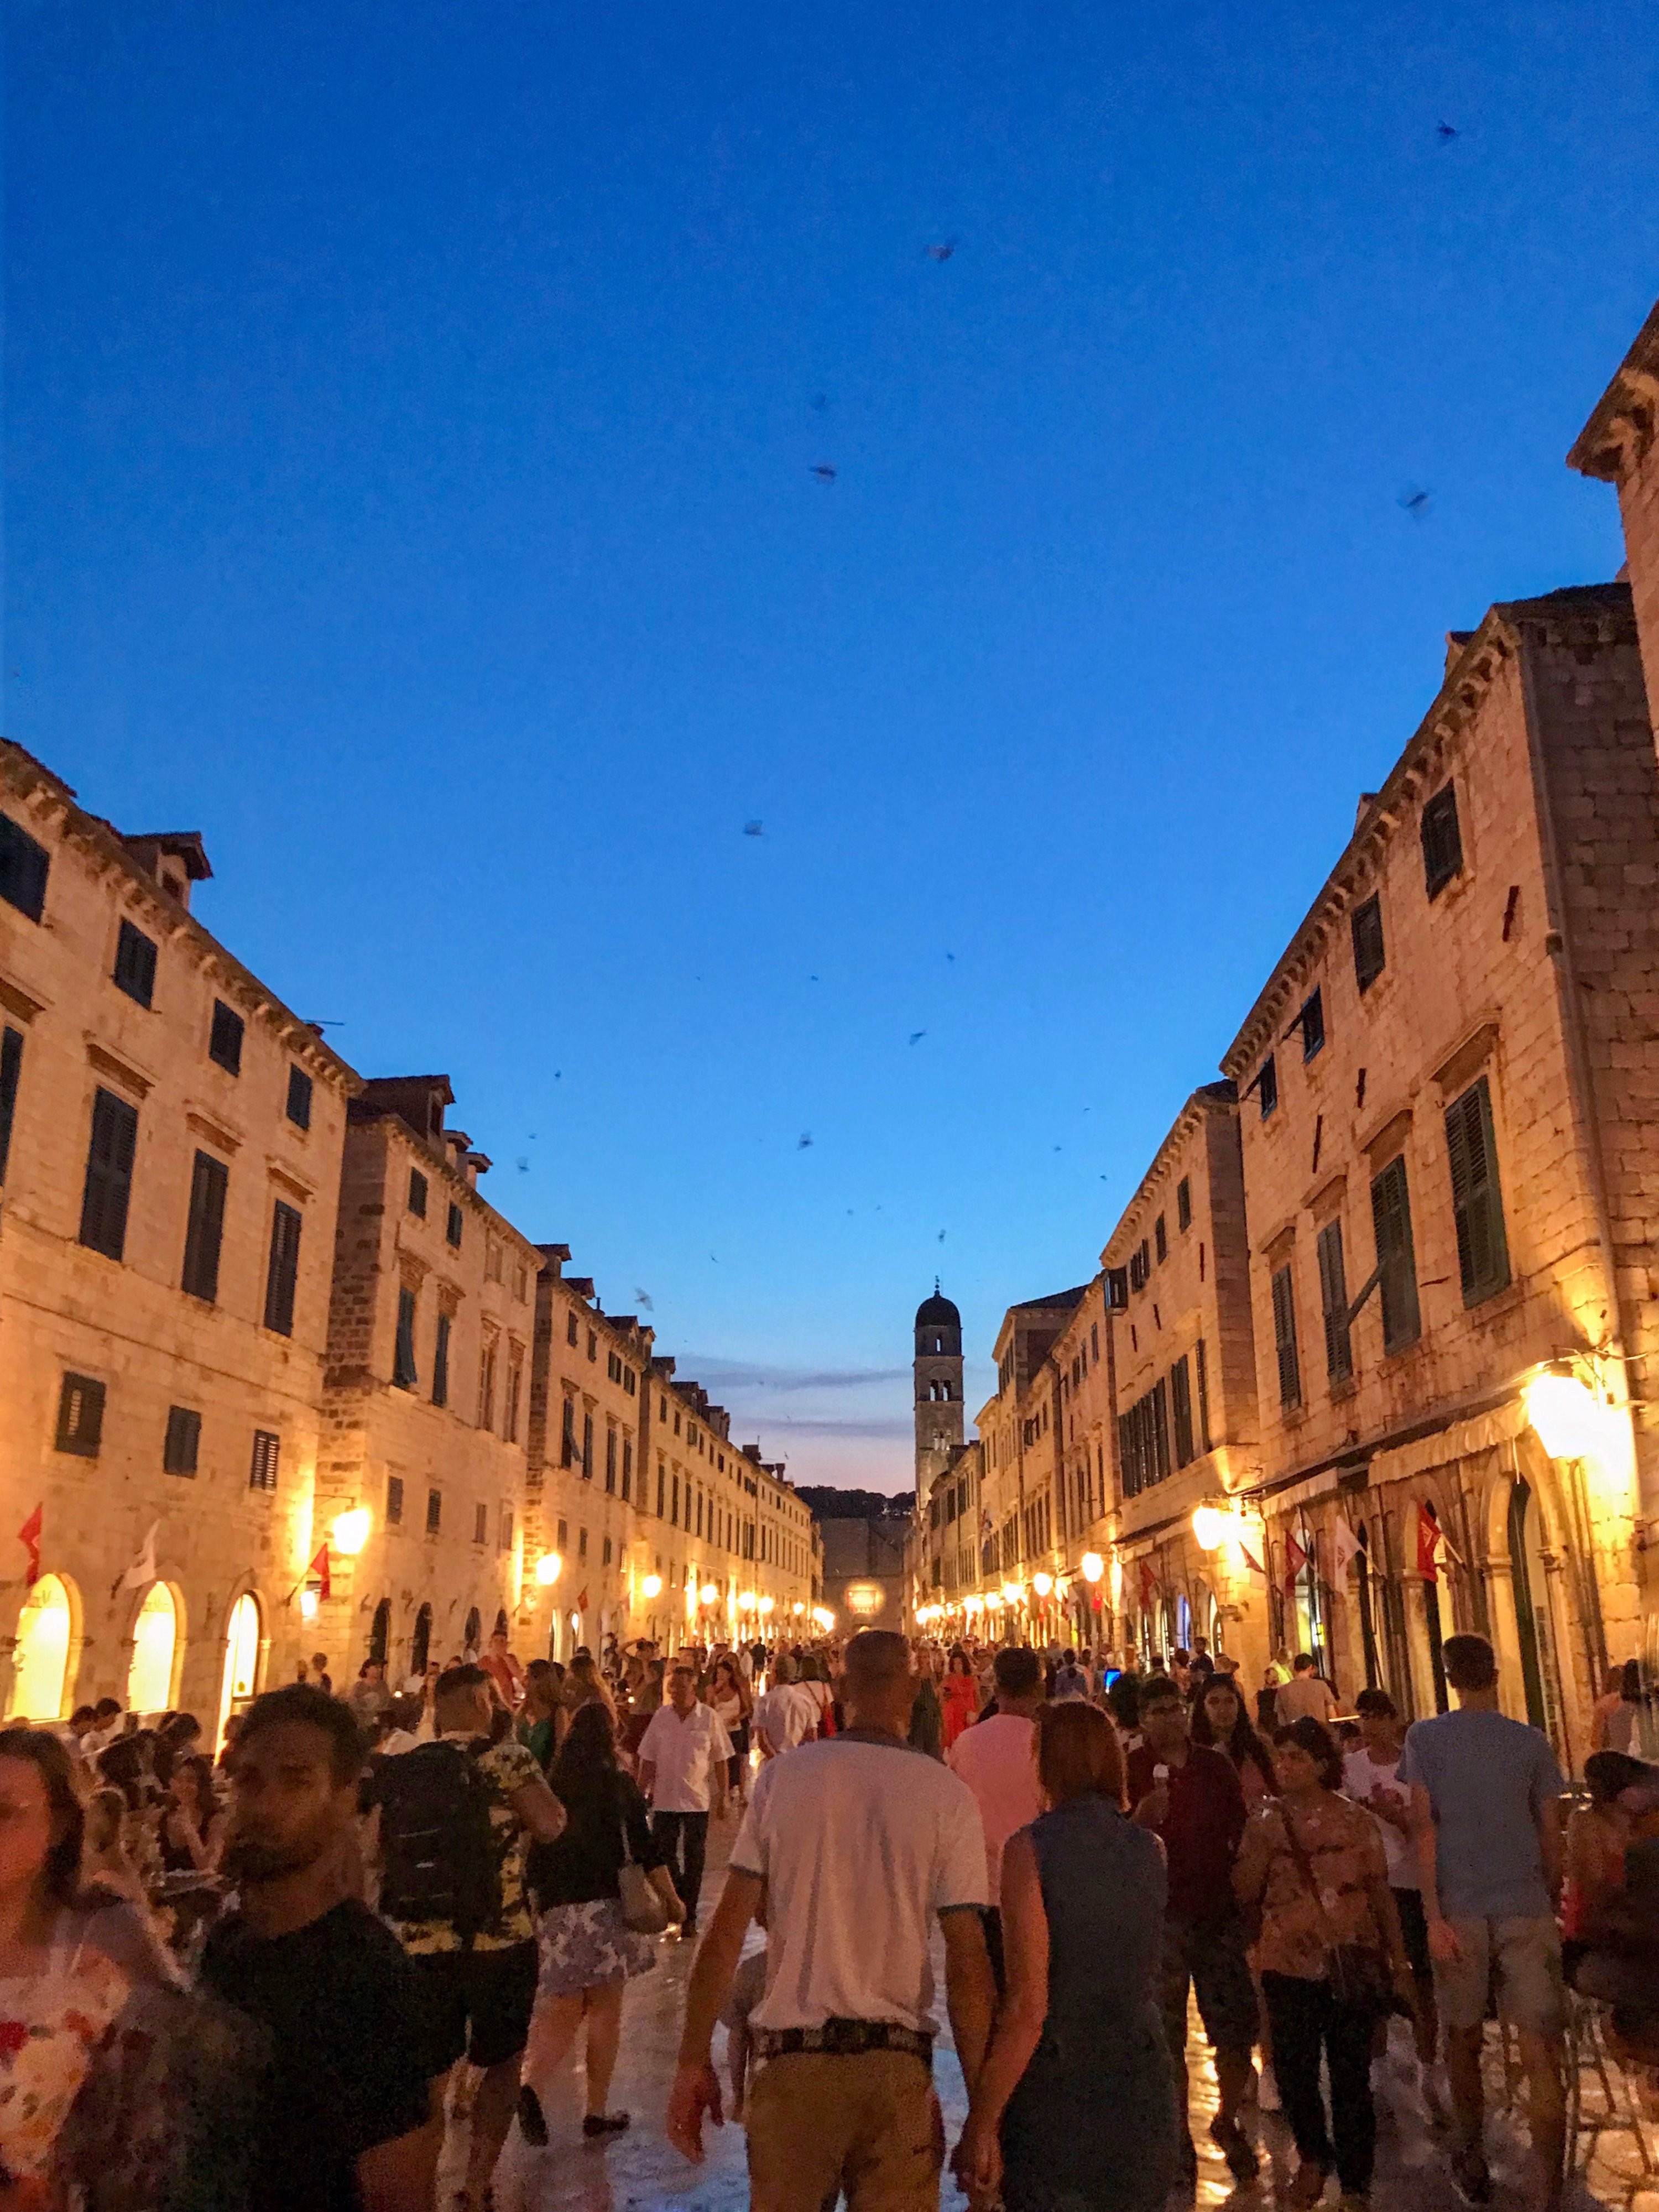 The street of Stradun, in Dubrovnik, southern Croatia. (Photo by Özge Şengelen)